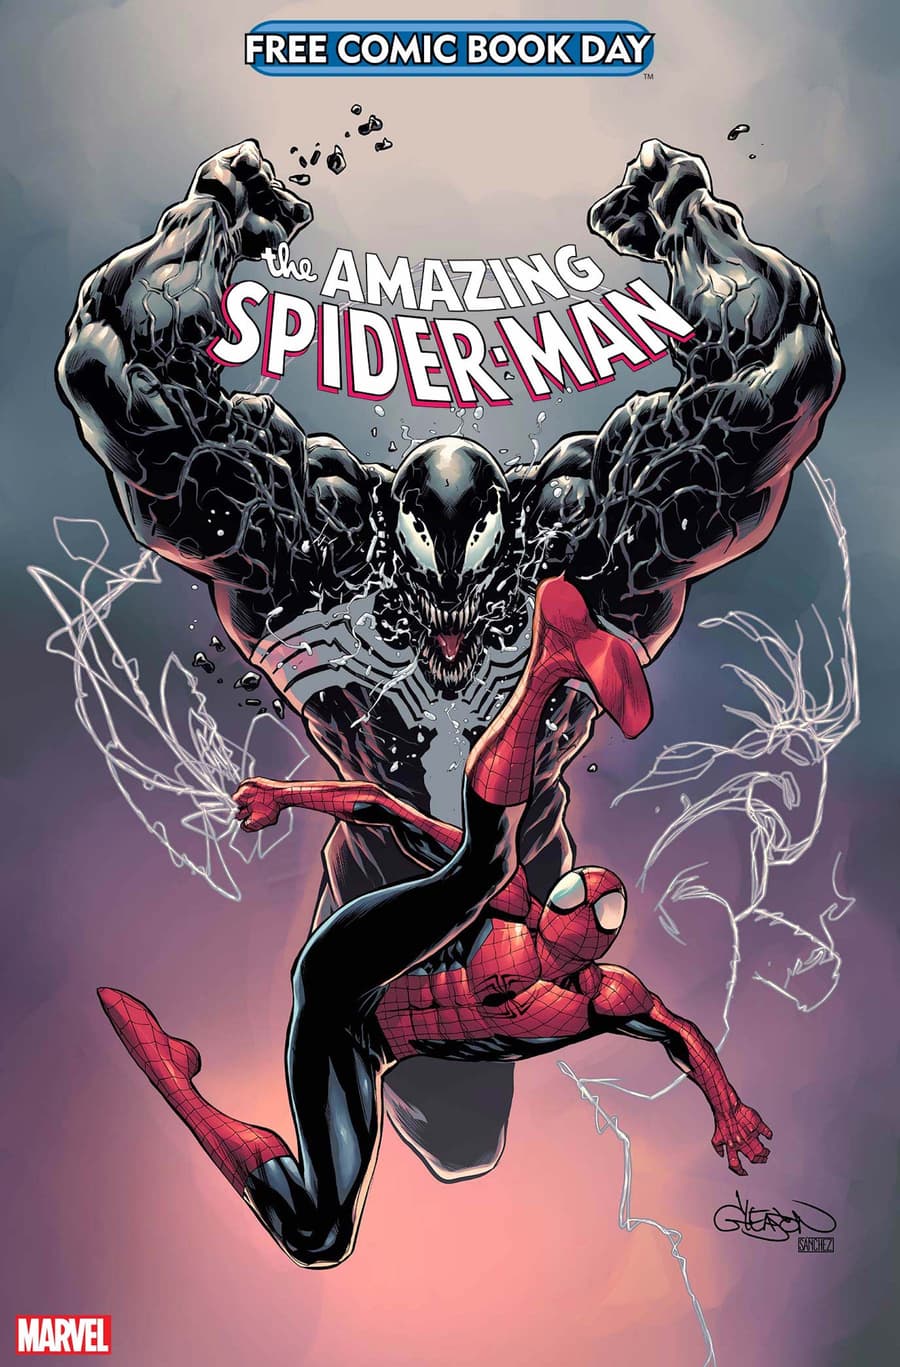 FREE COMIC BOOK DAY 2021: SPIDER-MAN/VENOM cover by Patrick Gleason